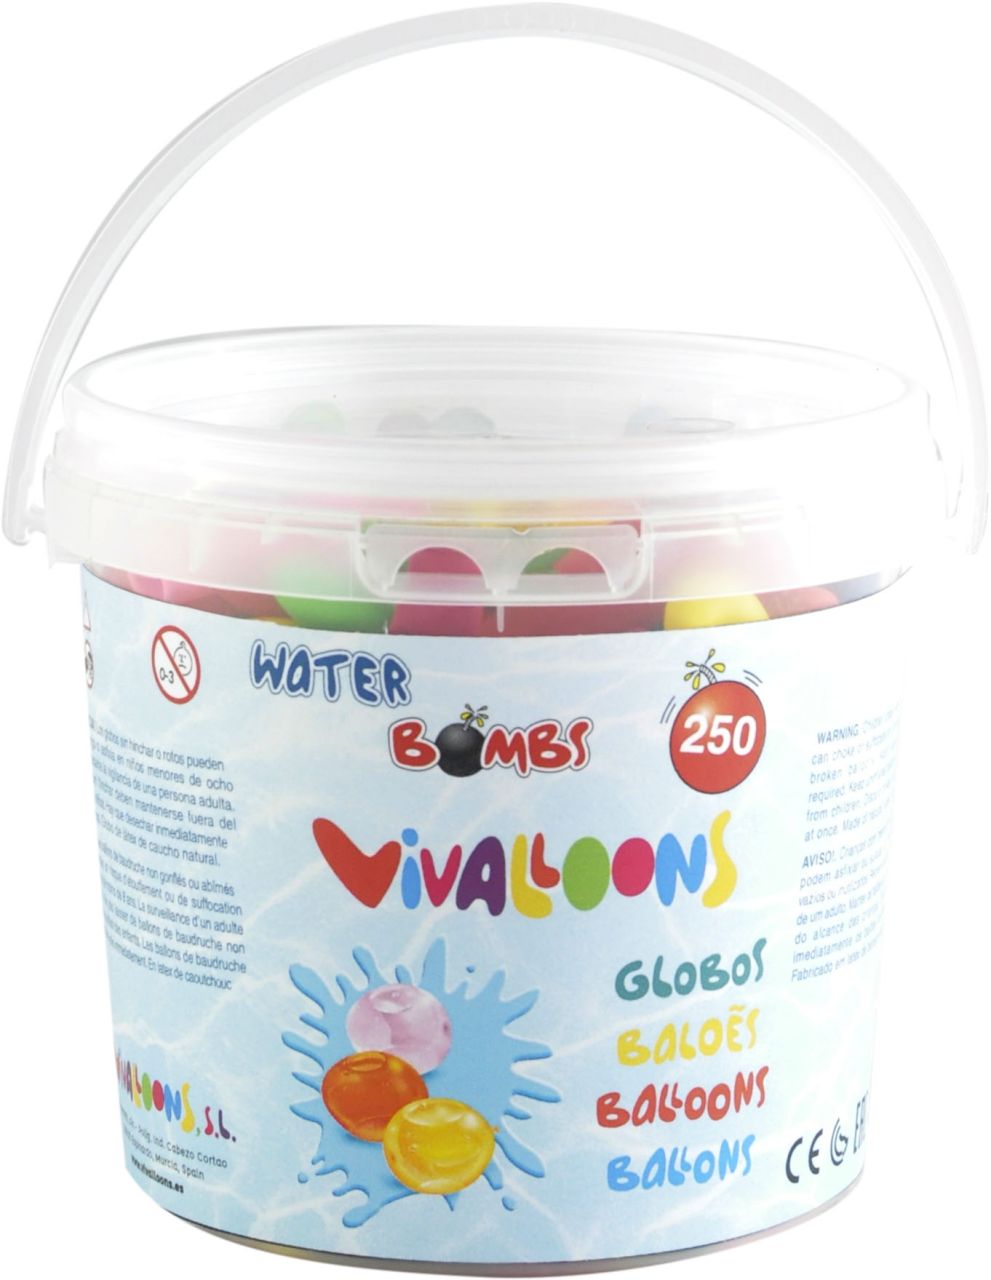 Vivalloons water balloons 250 pieces in bucket, ass.